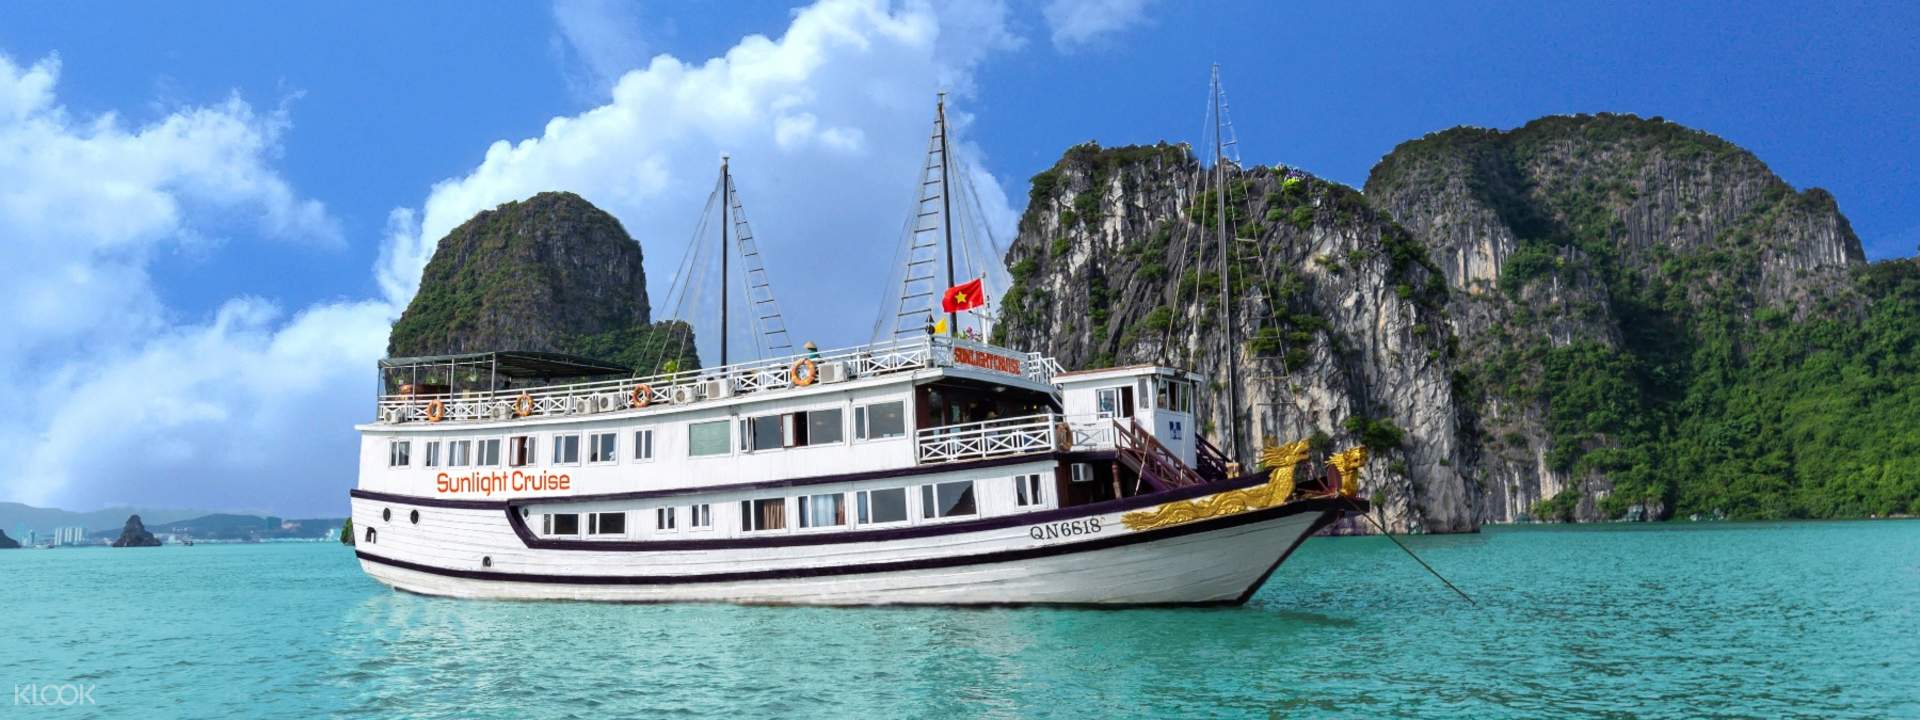 vietnam party cruise